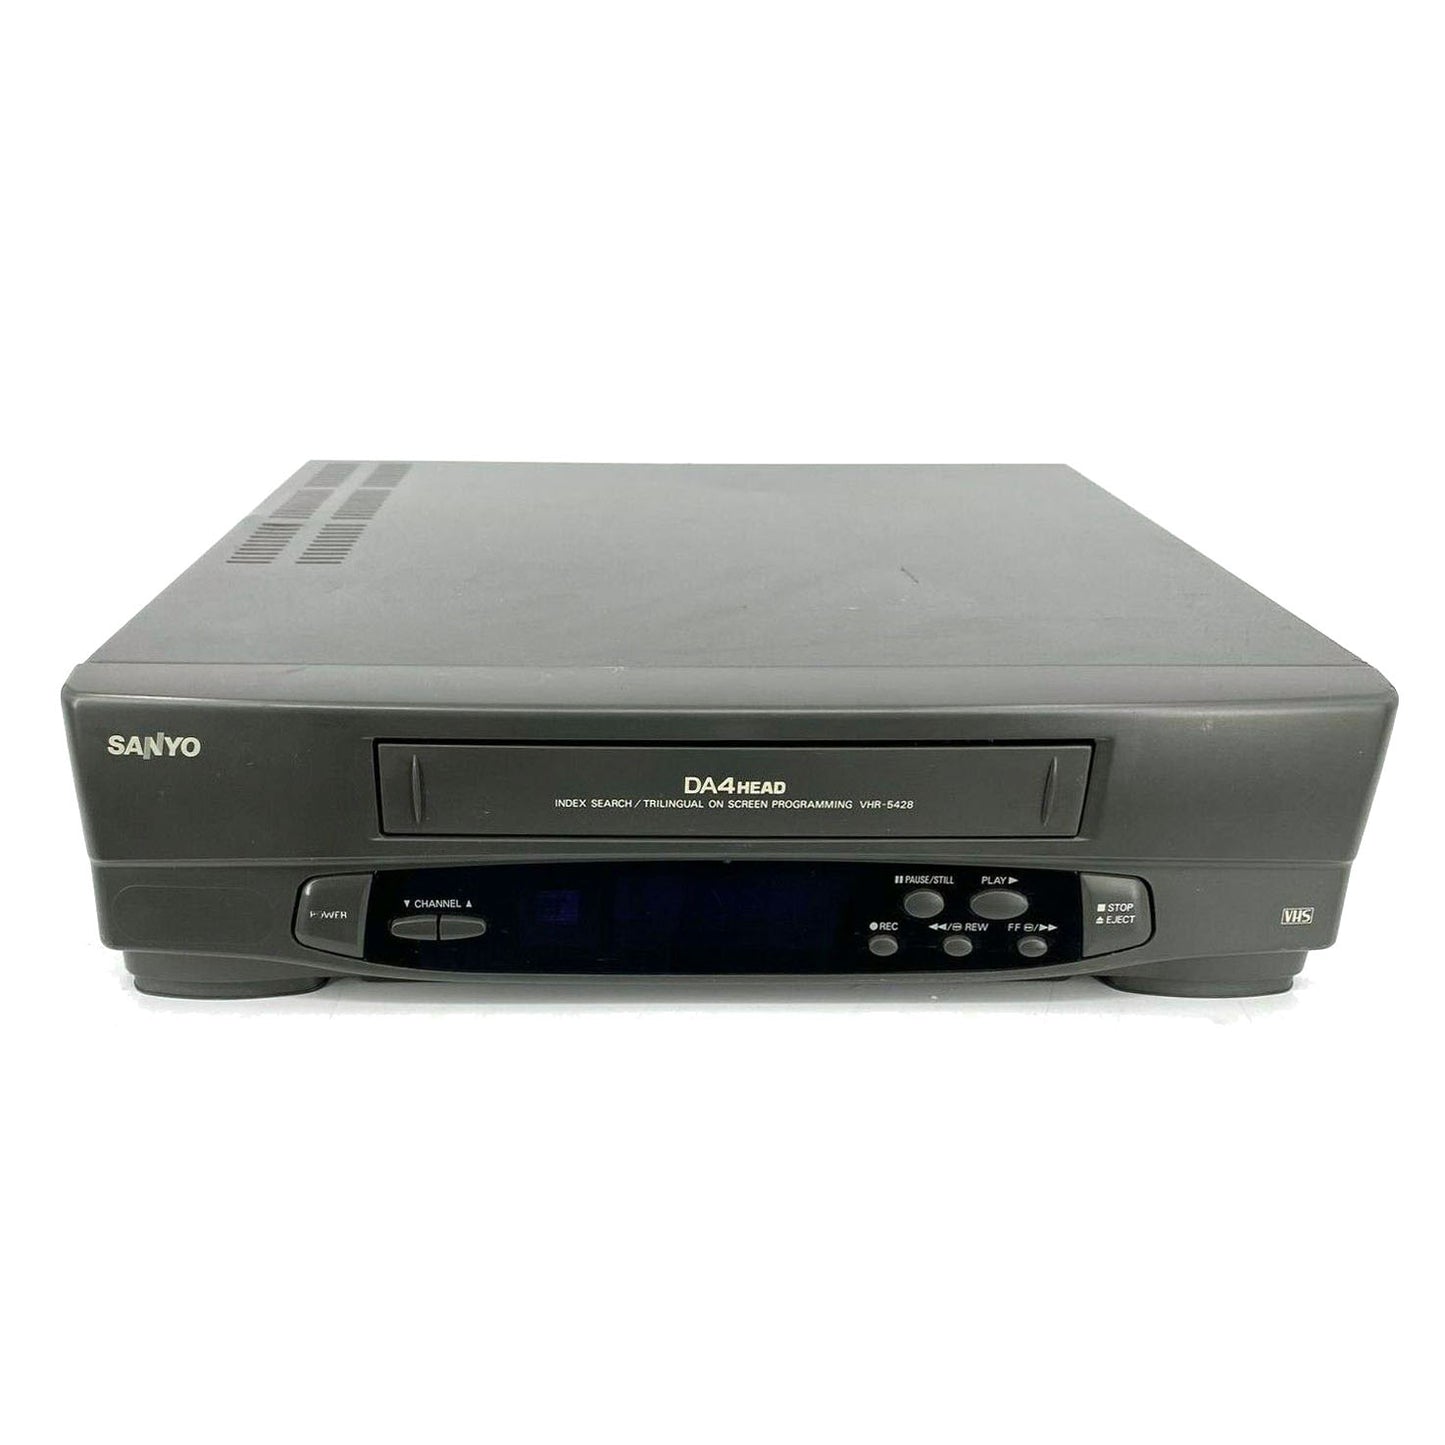 VHR-5428 VCR, 4-Head Mono